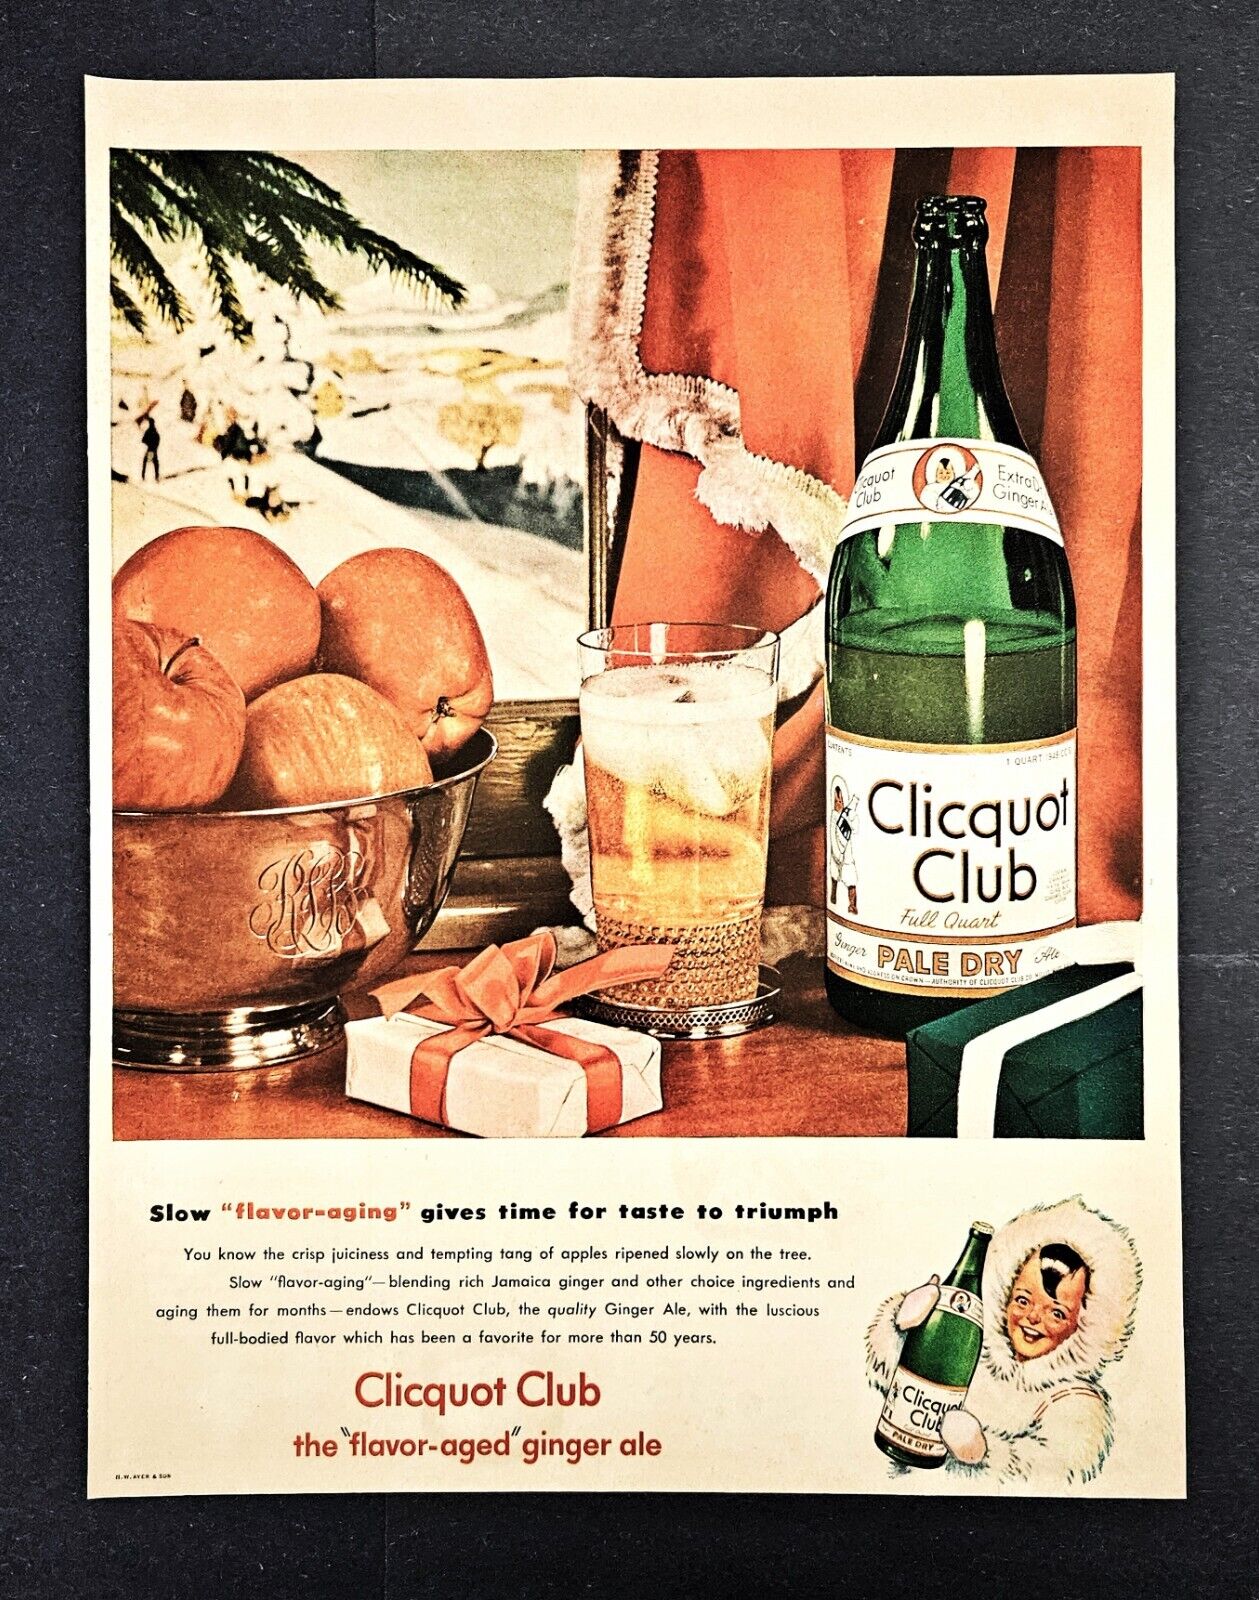 Vintage Ginger Ale ad original 1947 Clicquot Club drink print advertisement